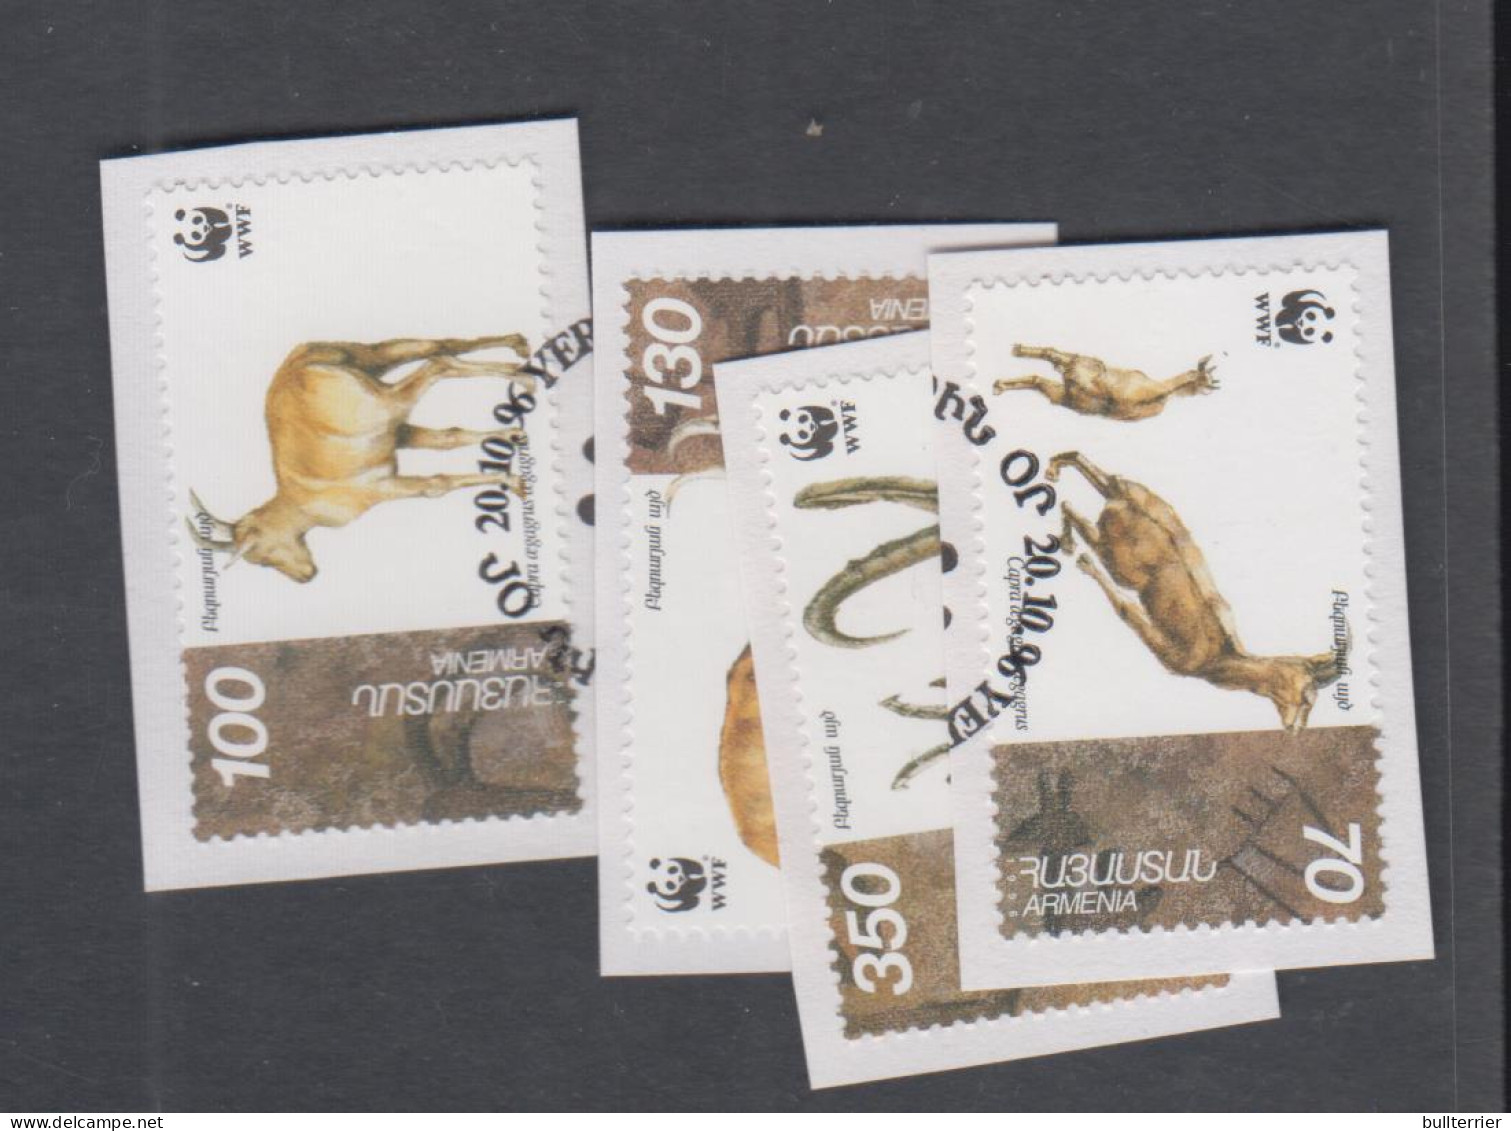 WILDLIFE - ARMENIA - 1996 - WWF / IBEX SET OF 4 FINE USED - Used Stamps